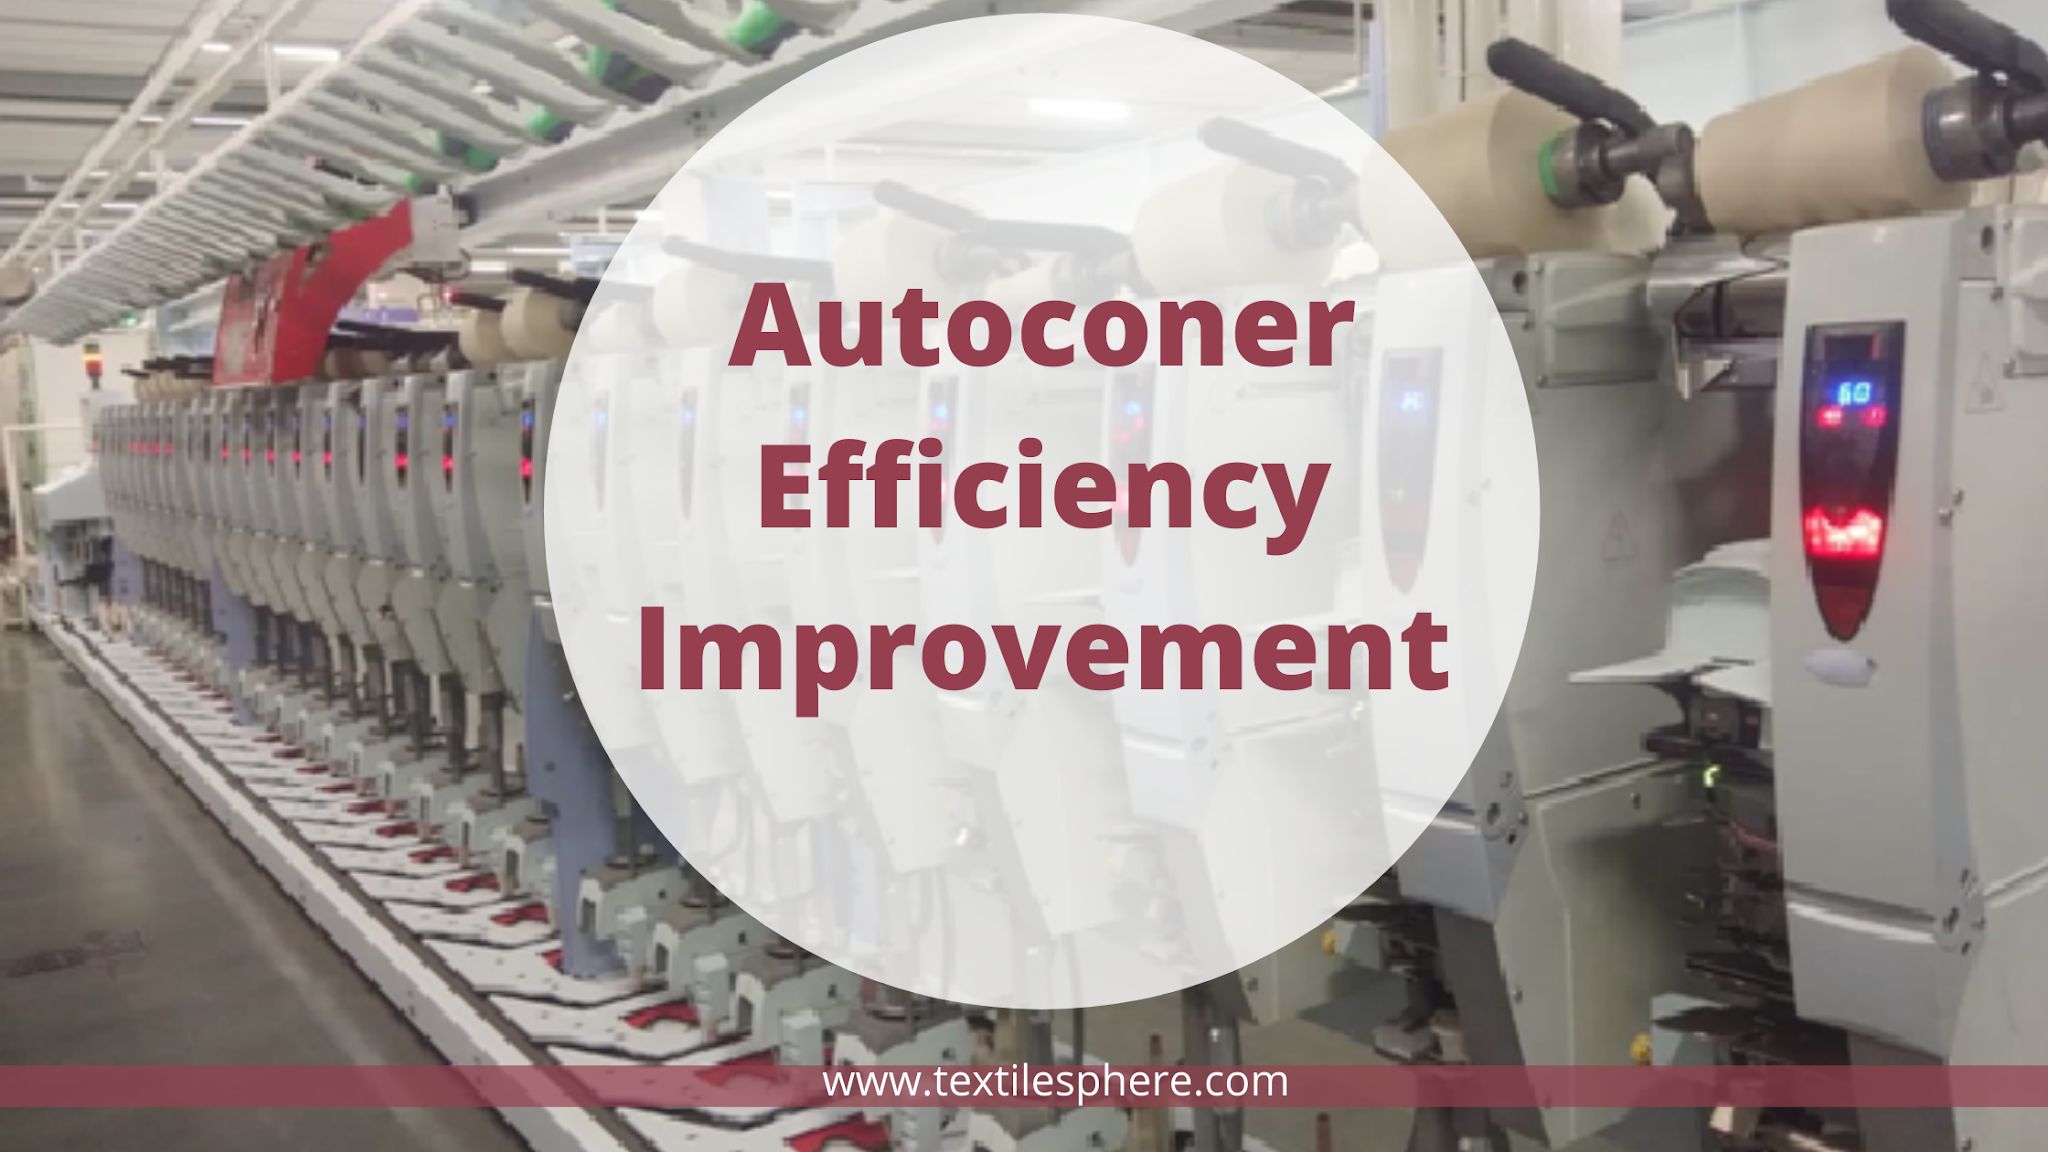 autoconer efficiency improvement textile sphere